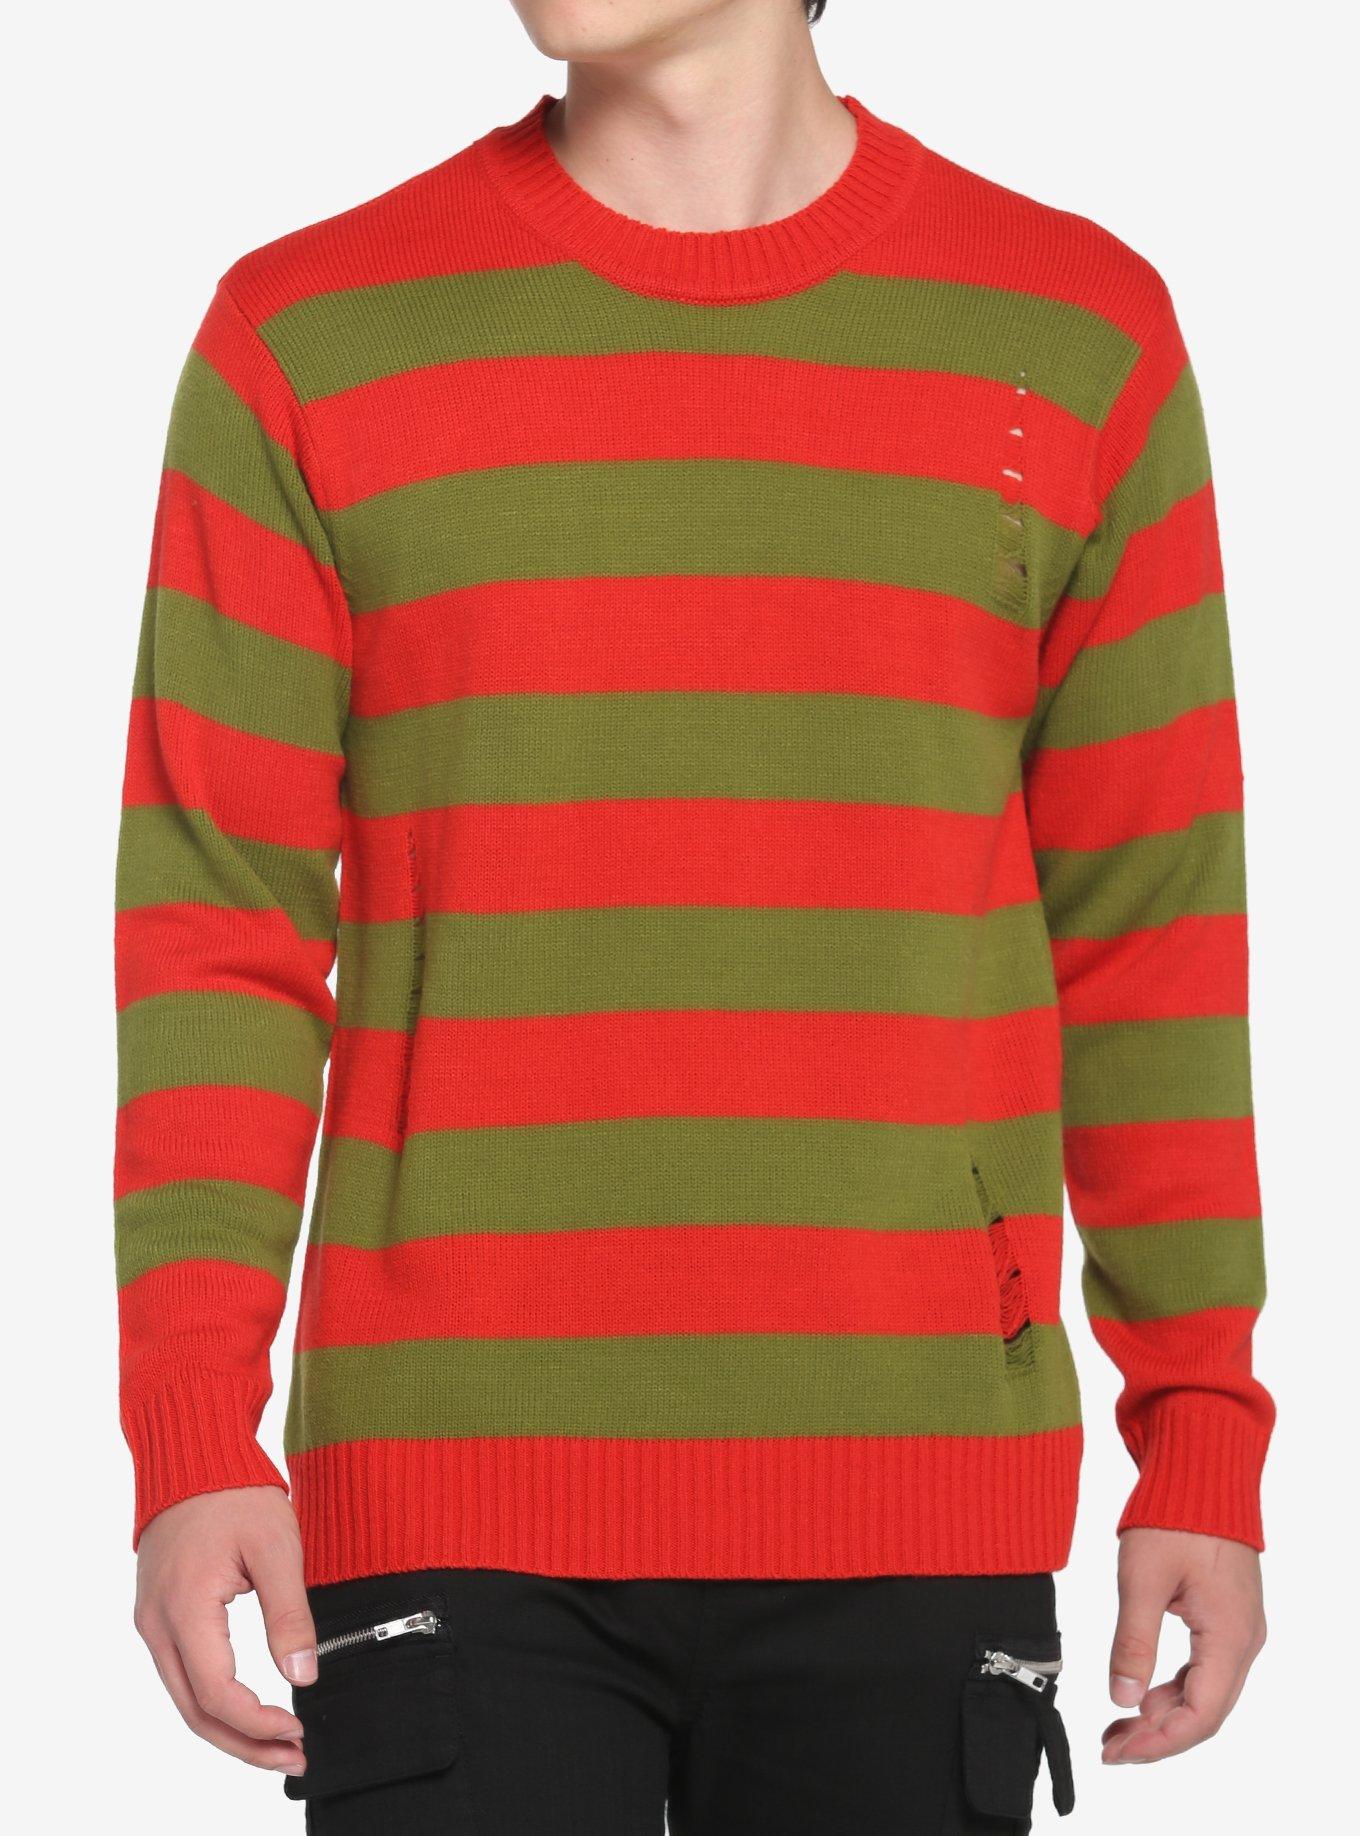 Nightmare On Elm Street Freddy Krueger Sweater | Hot Topic